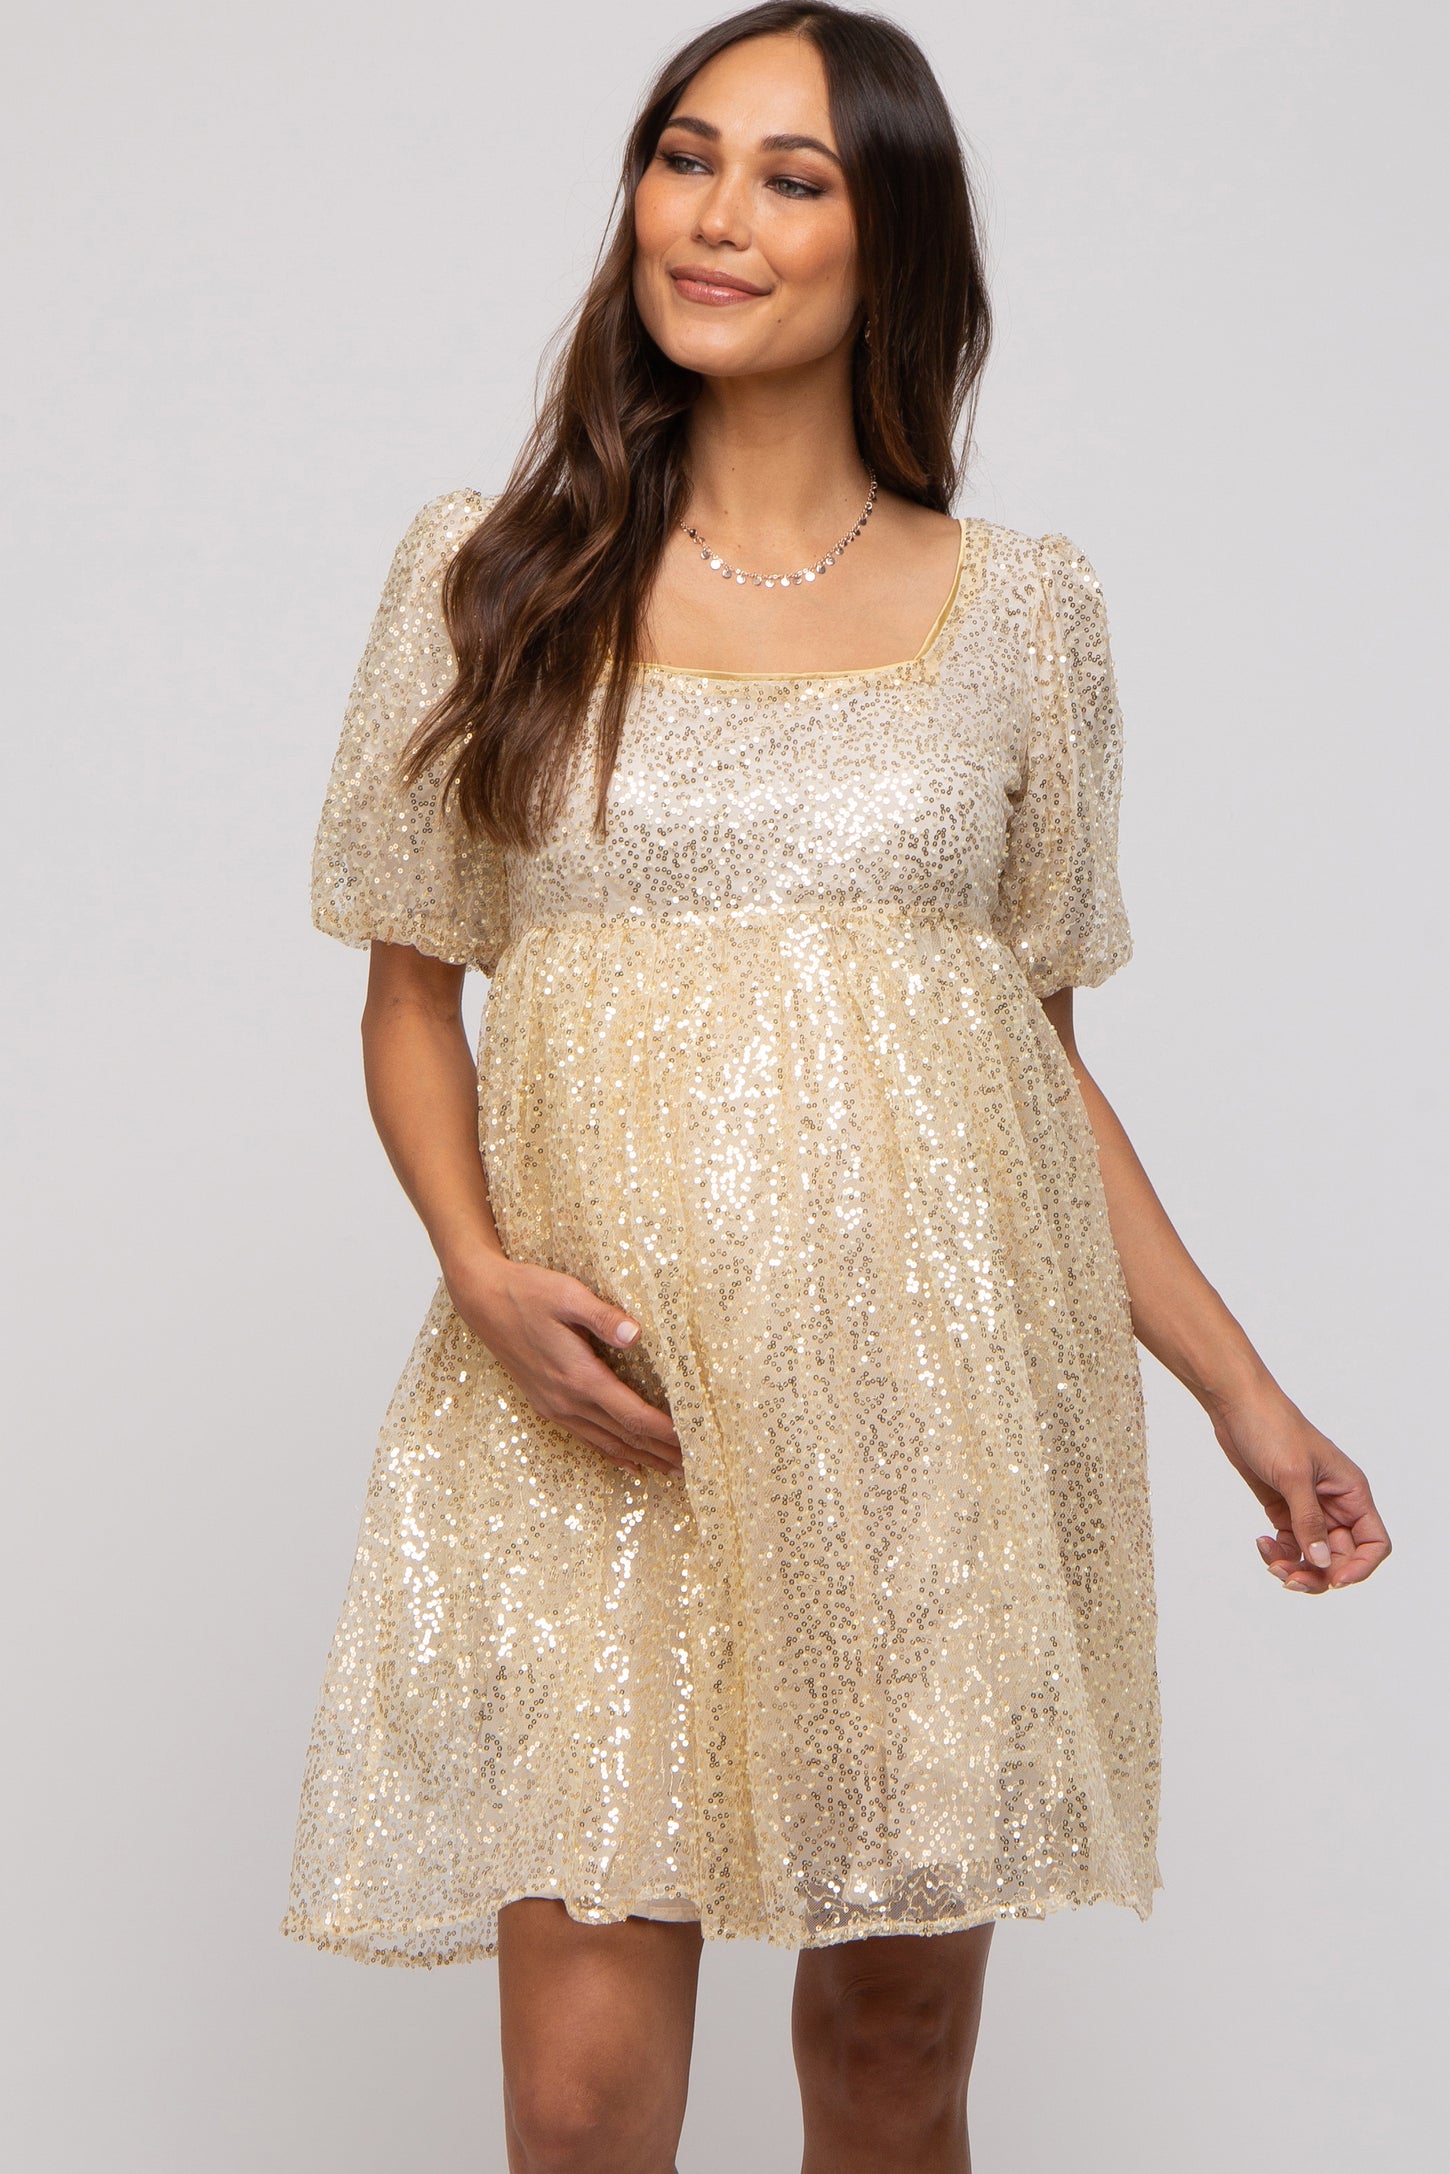 gold baby shower dress